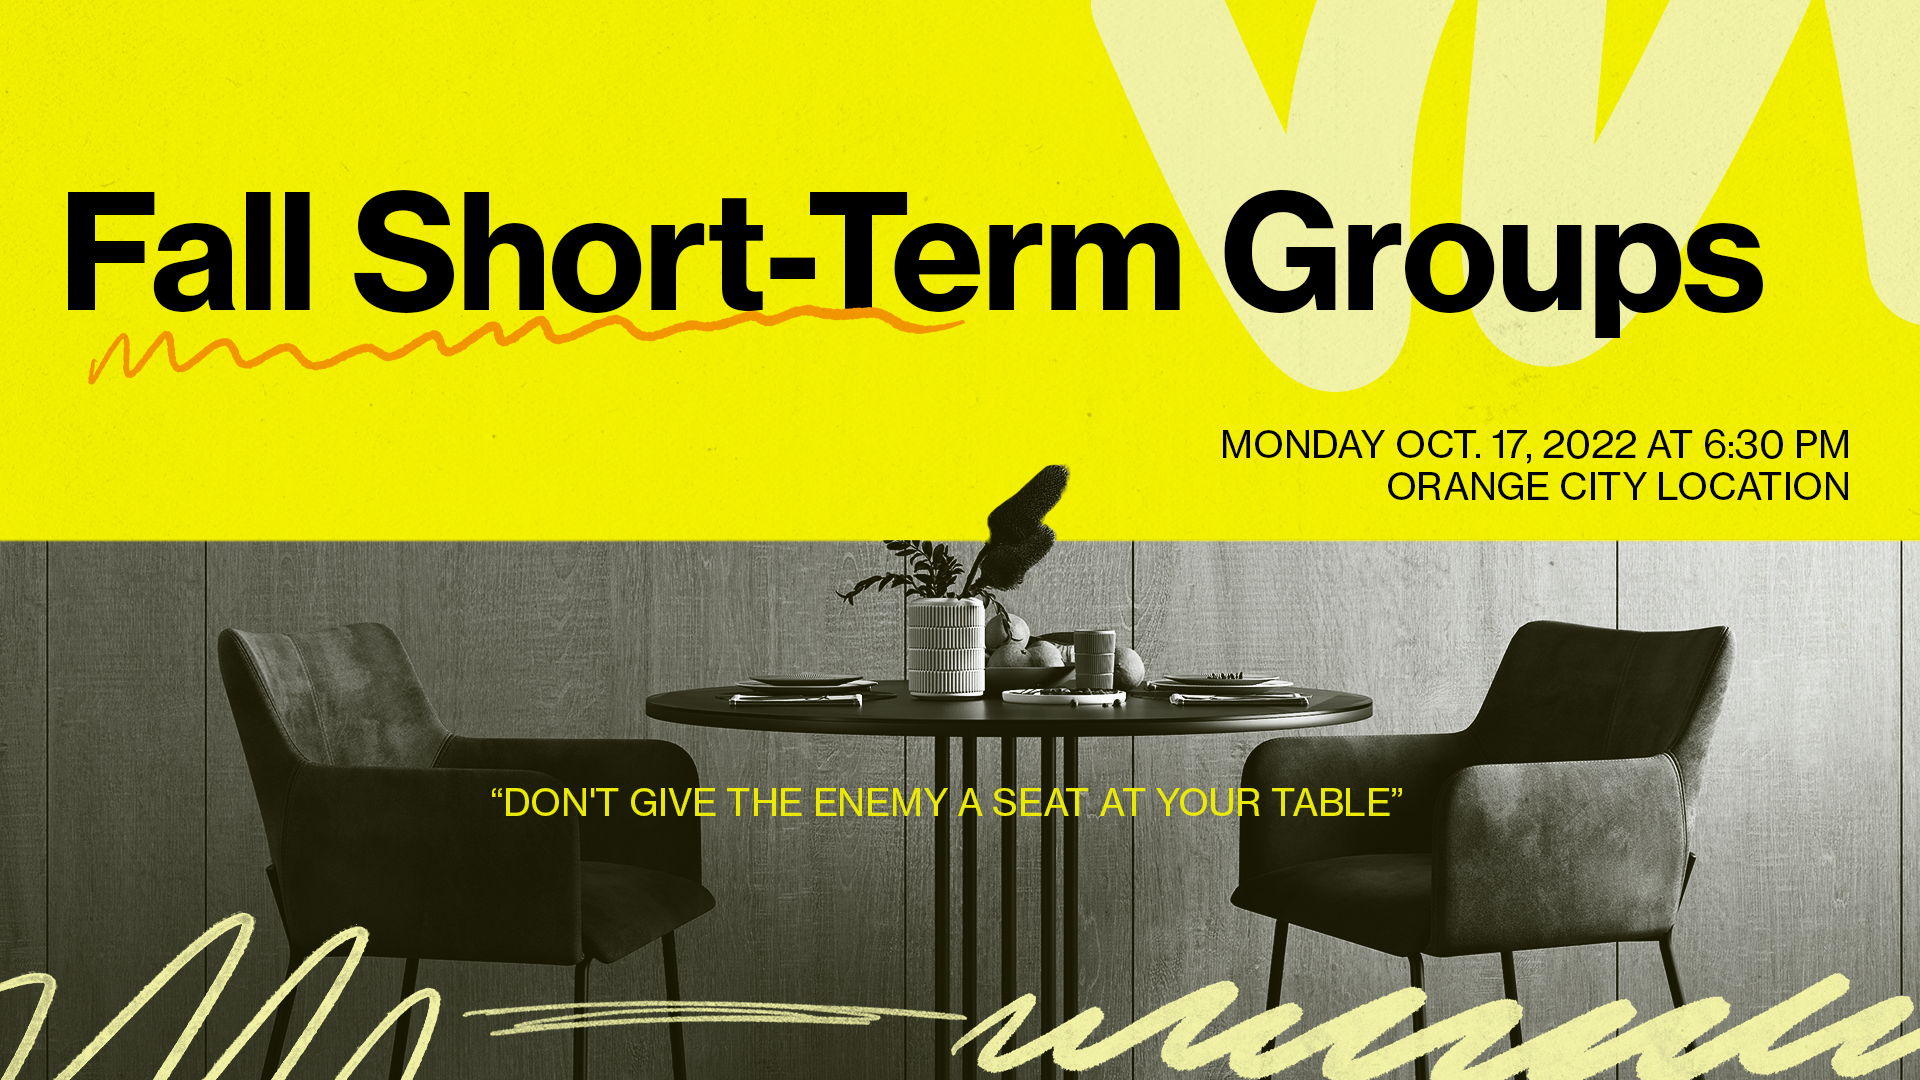 Fall Short-Term Groups